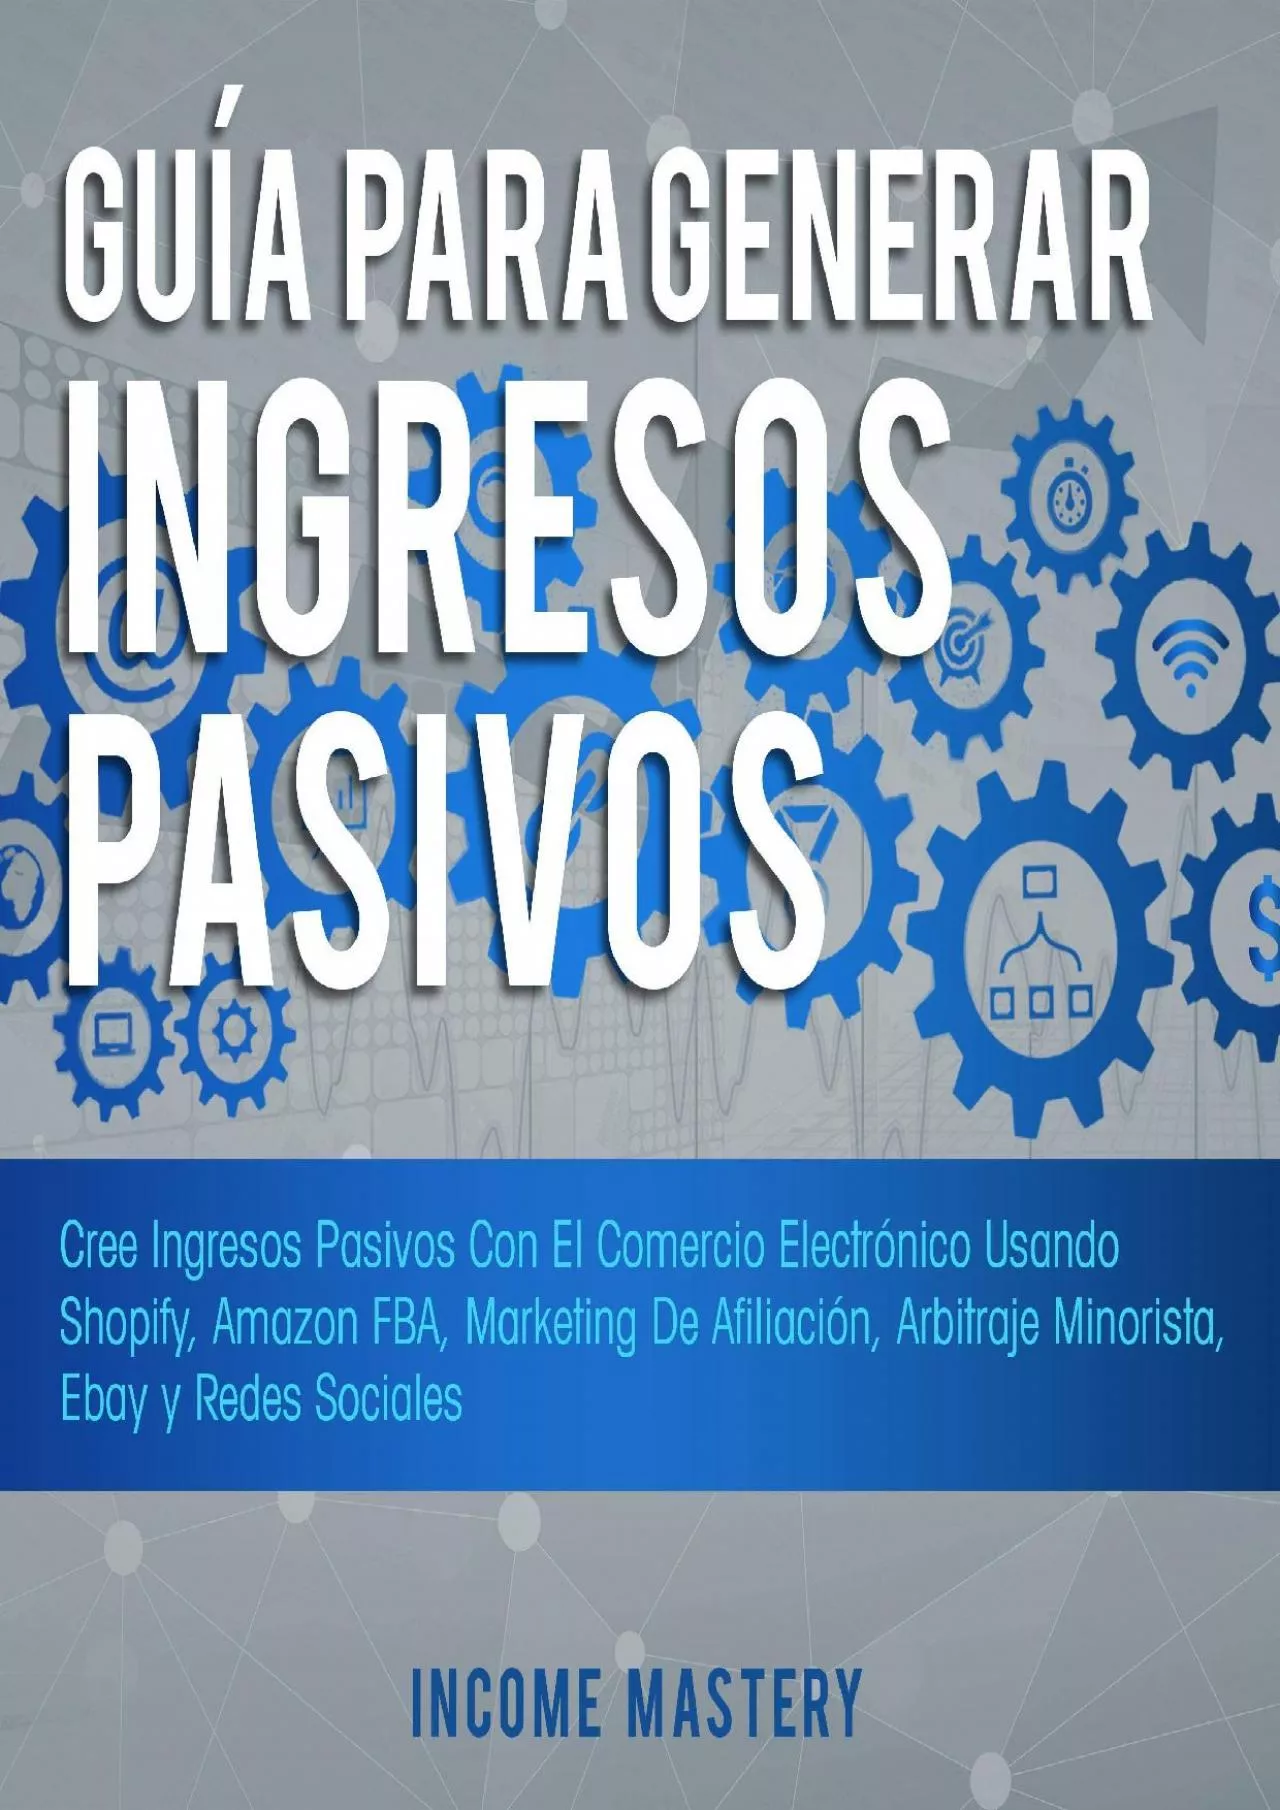 Guía Para Generar Ingresos Pasivos [Guide to Generate Passive Income]: Cree Ingresos